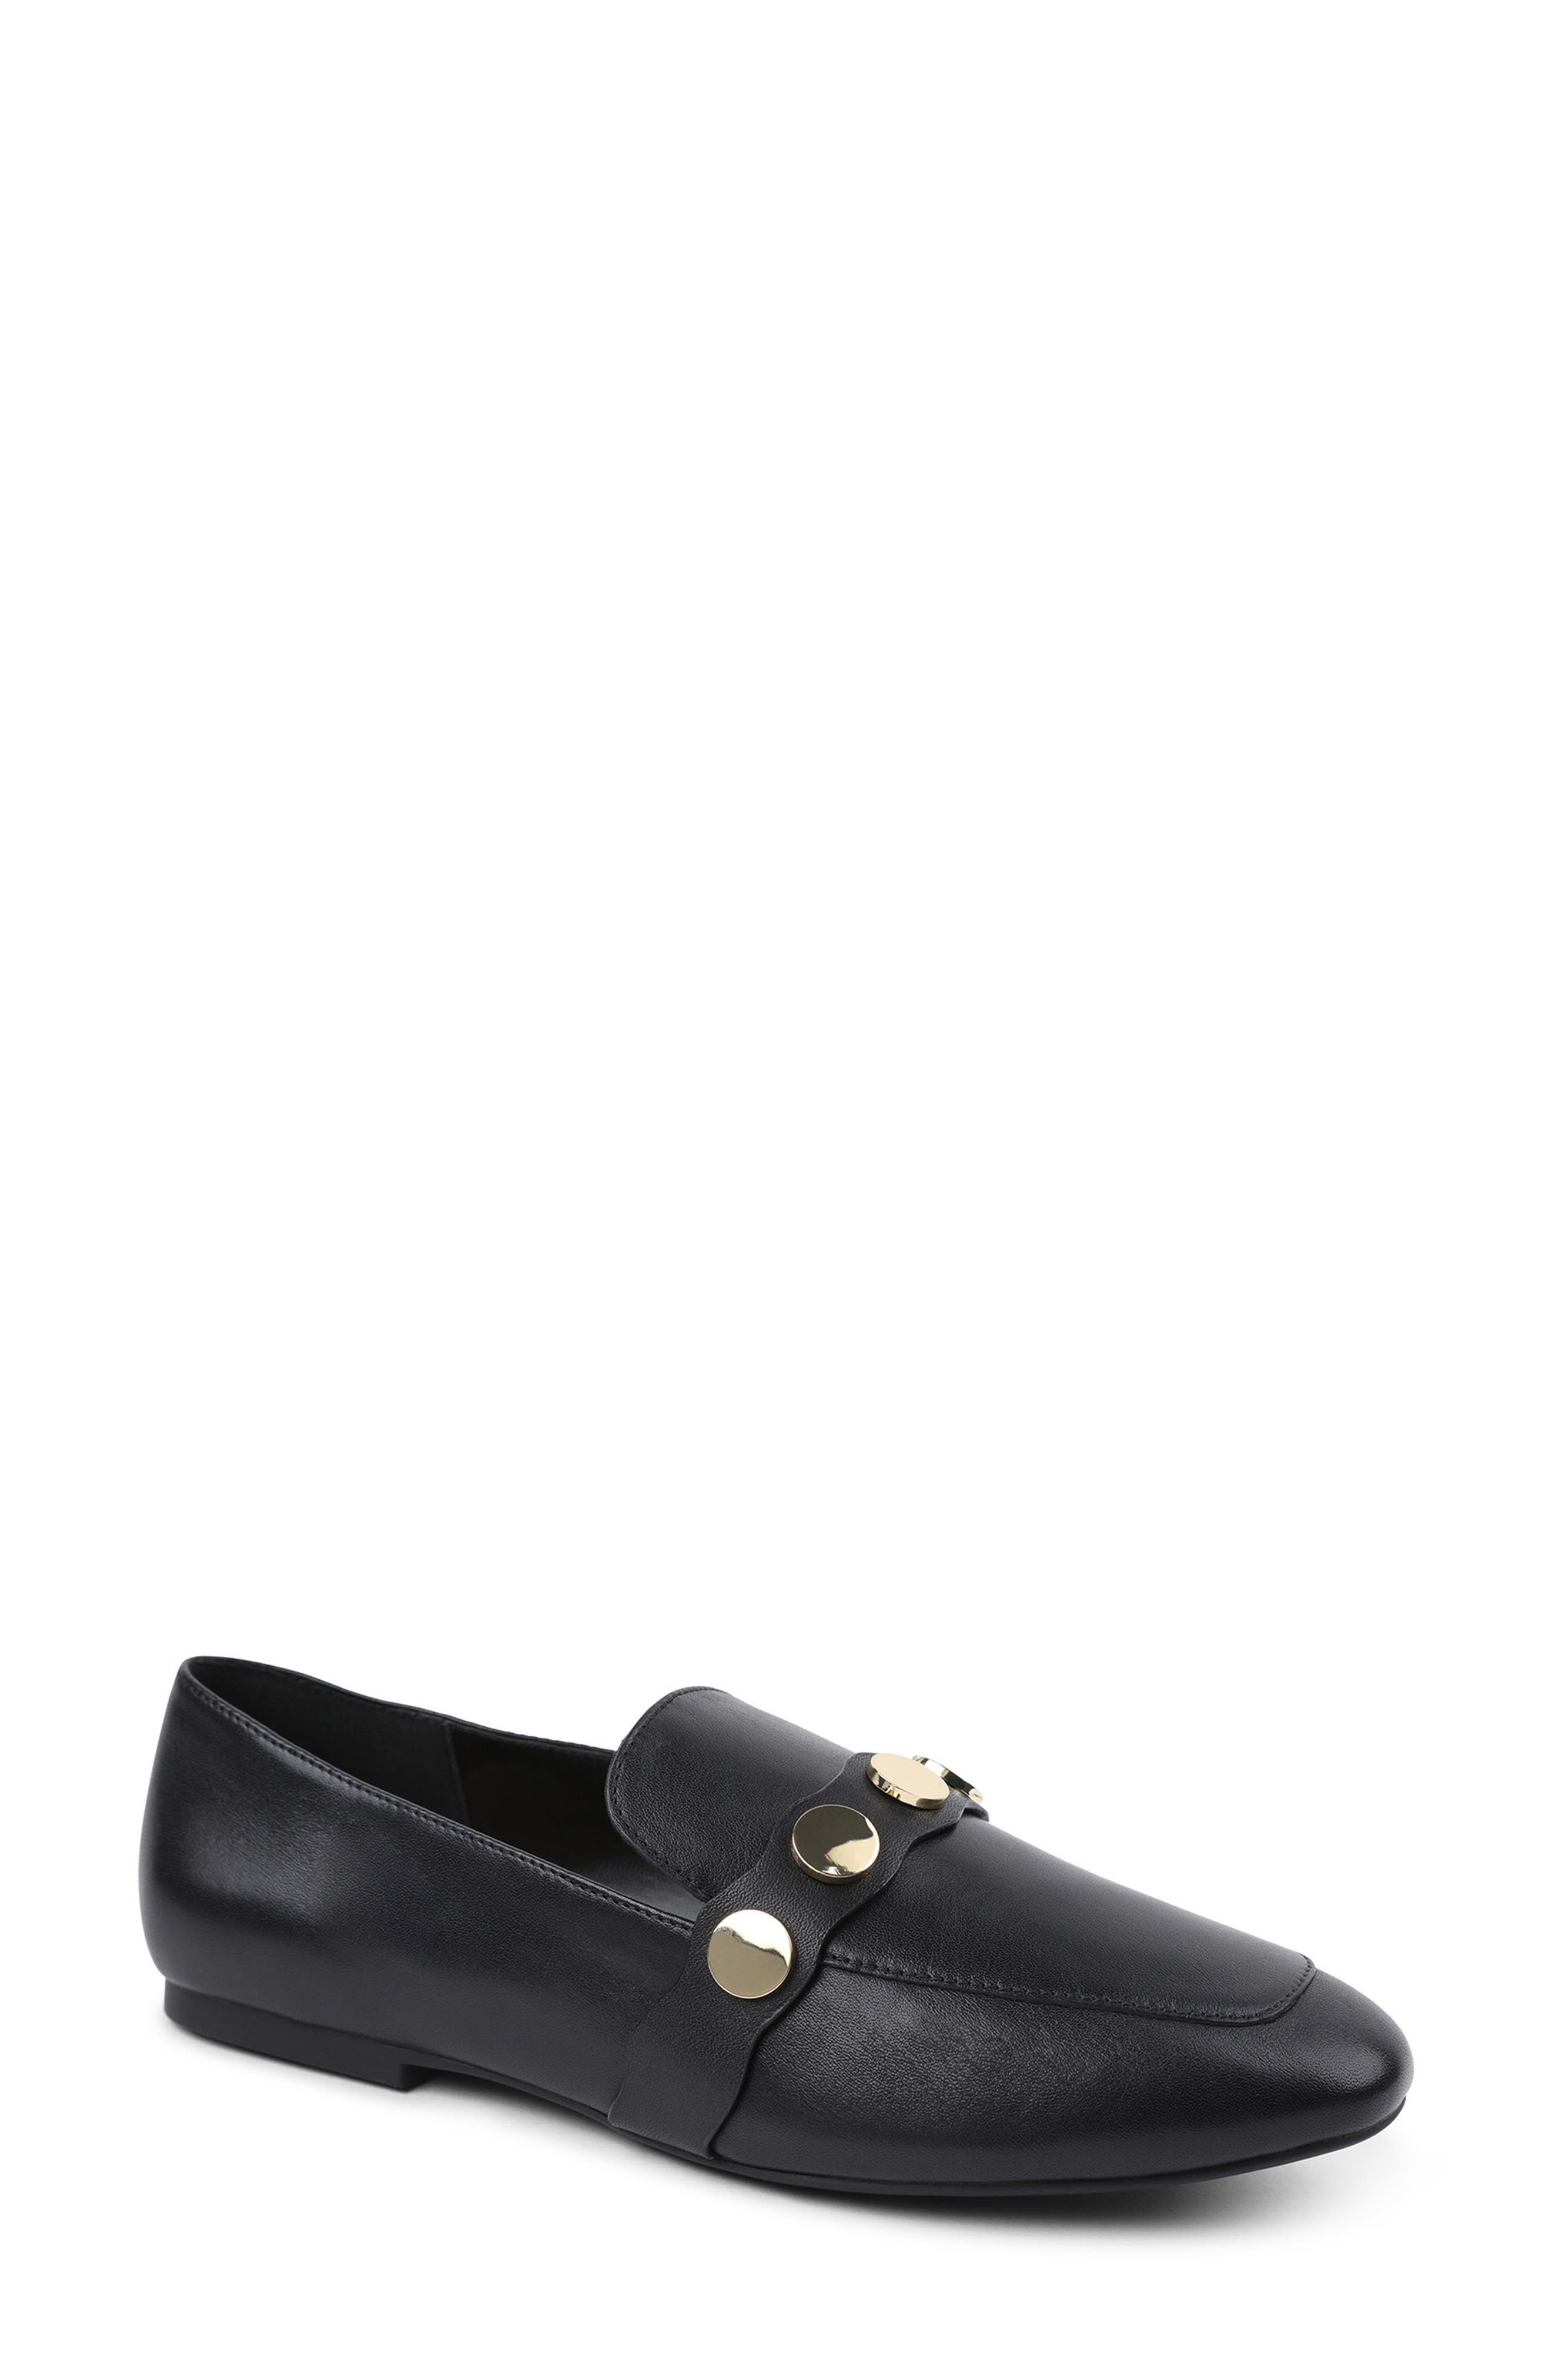 Kensie Women's Slip-on Shoes Josefina KS171110 black/ tuape 